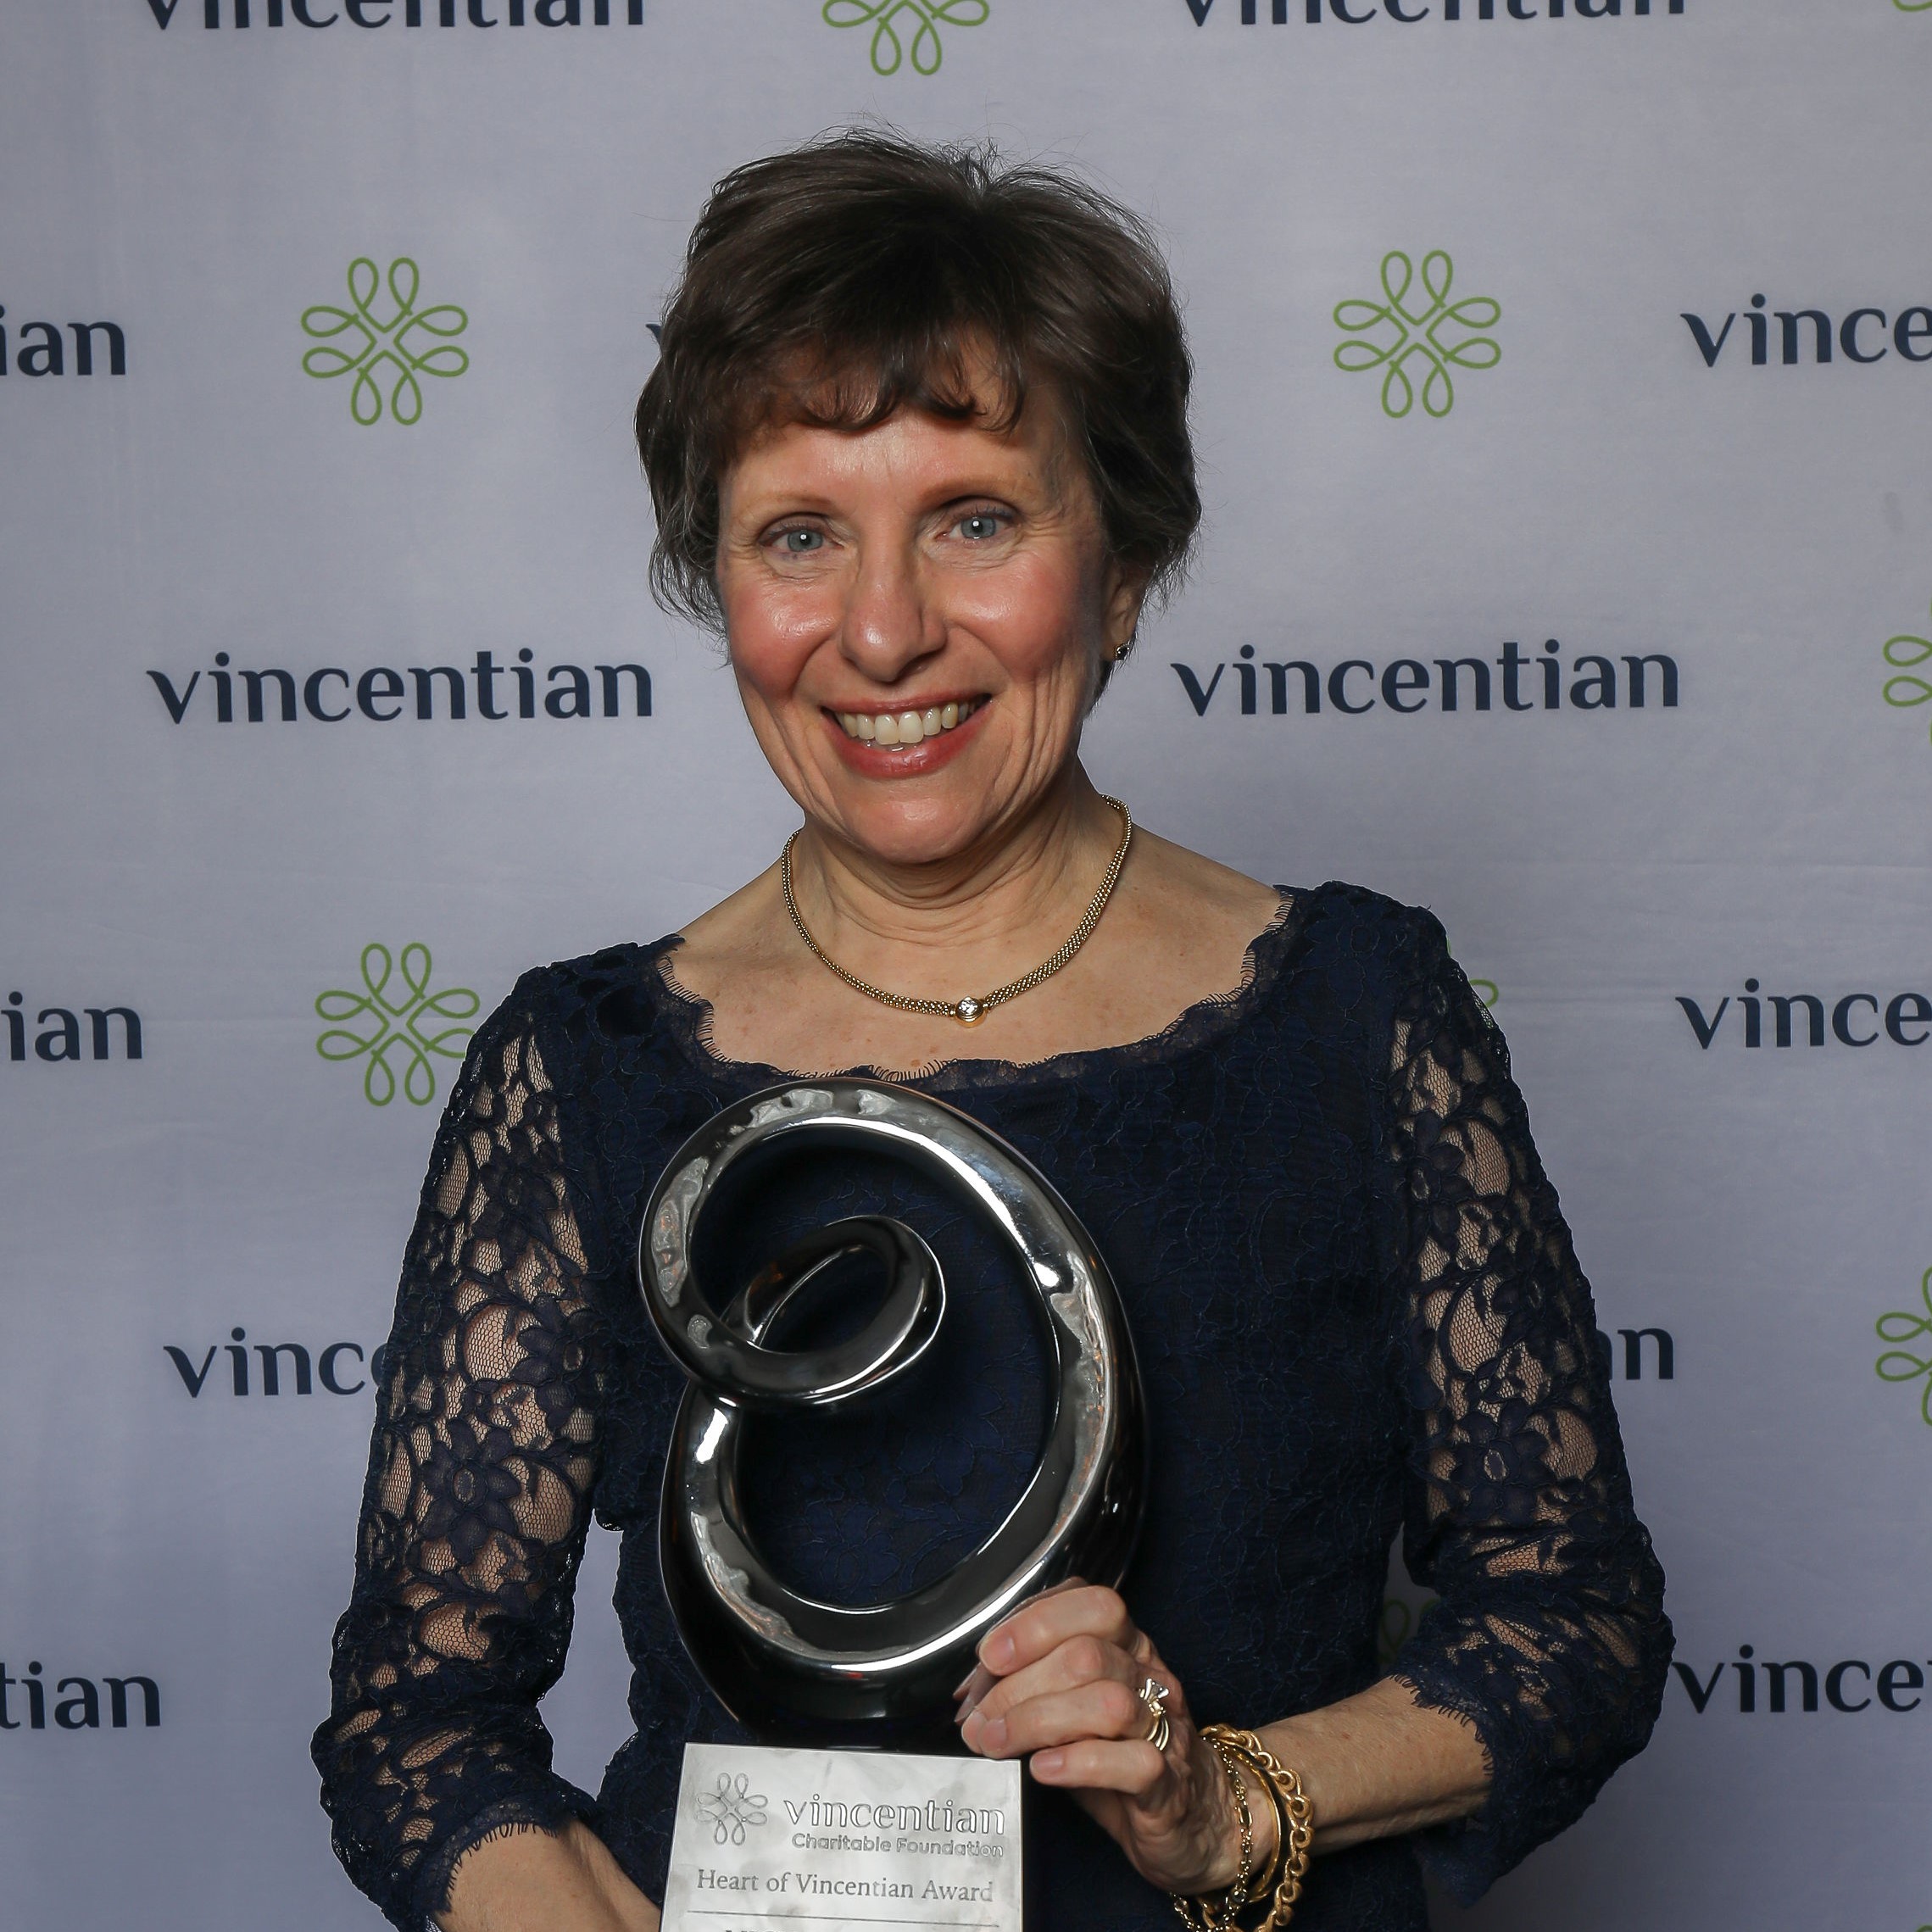 Heart of Vincentian Award